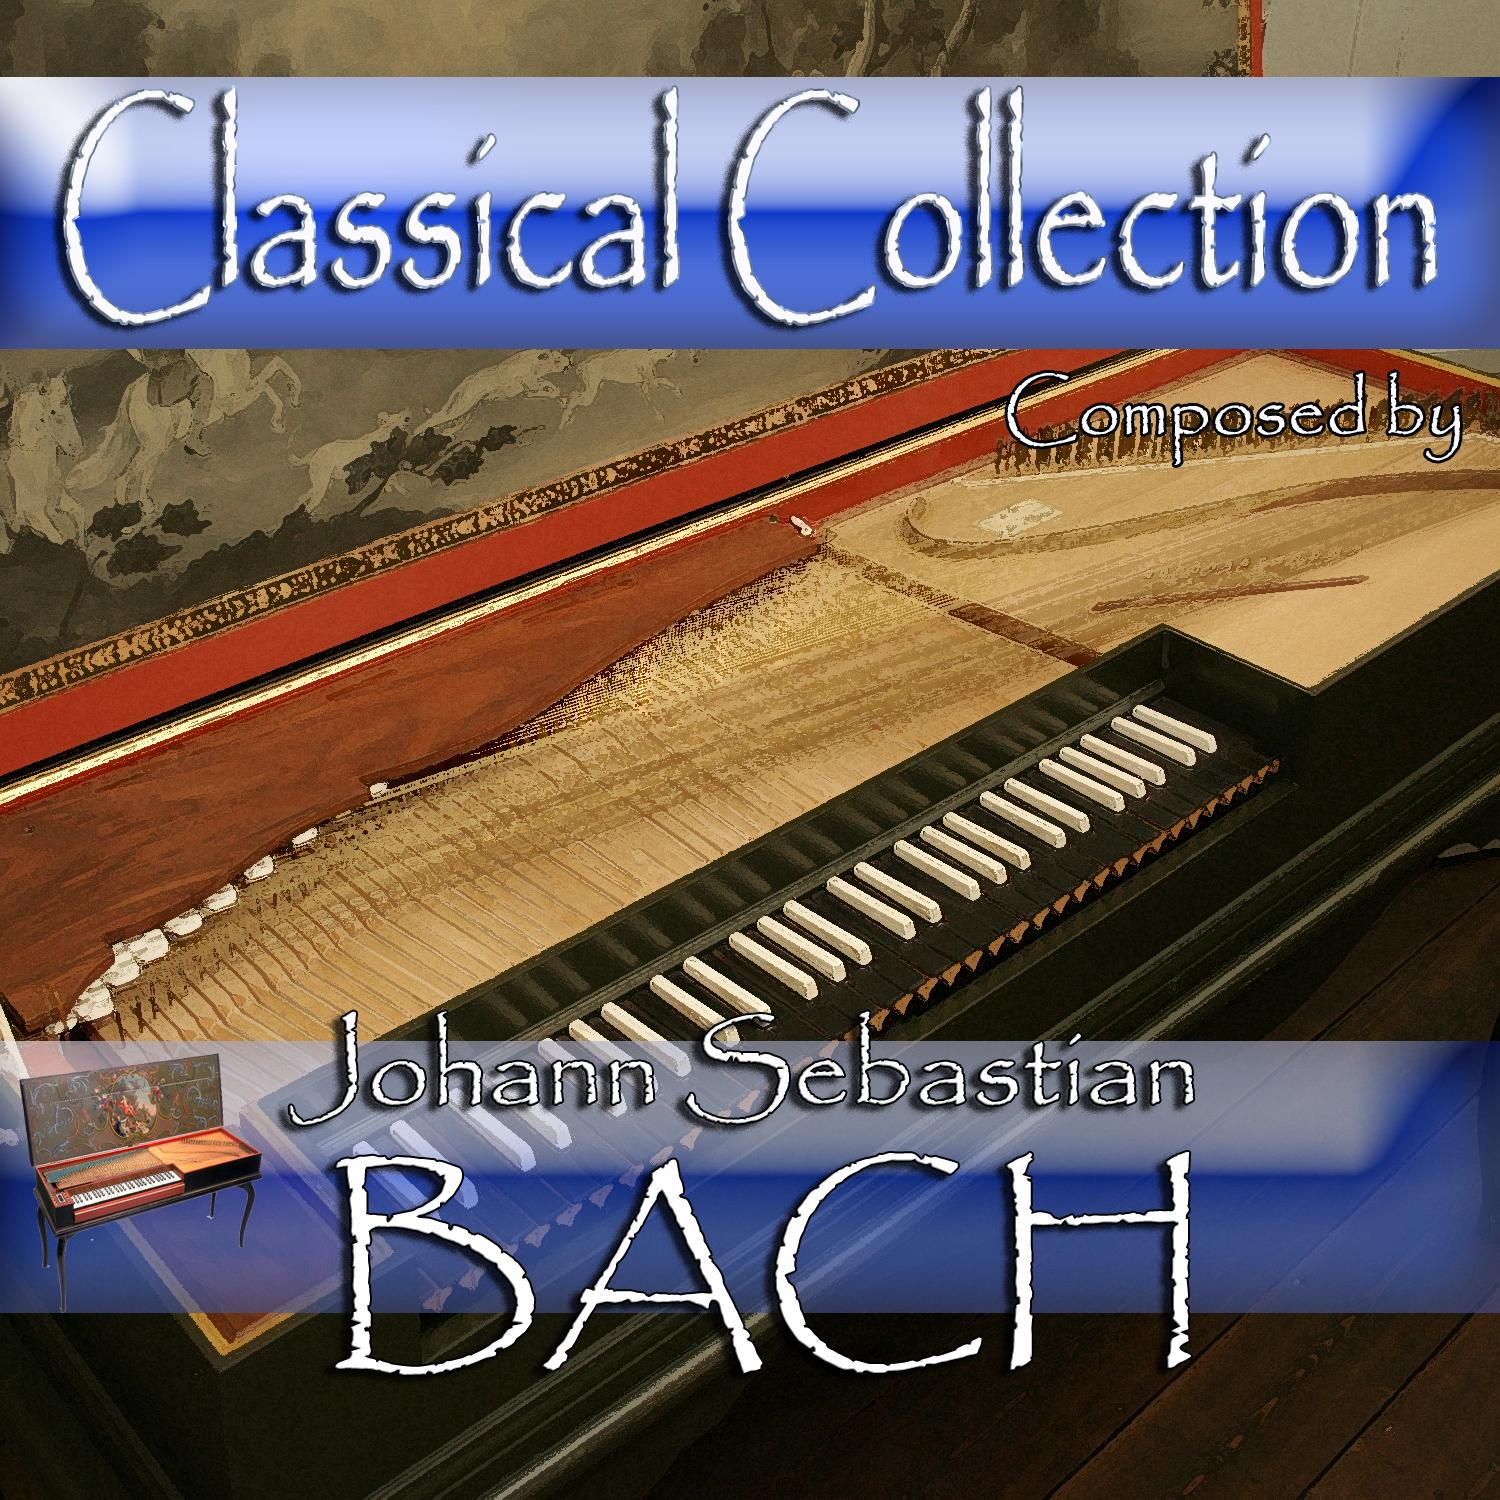 Classical Collection Composed by Johann Sebastian Bach